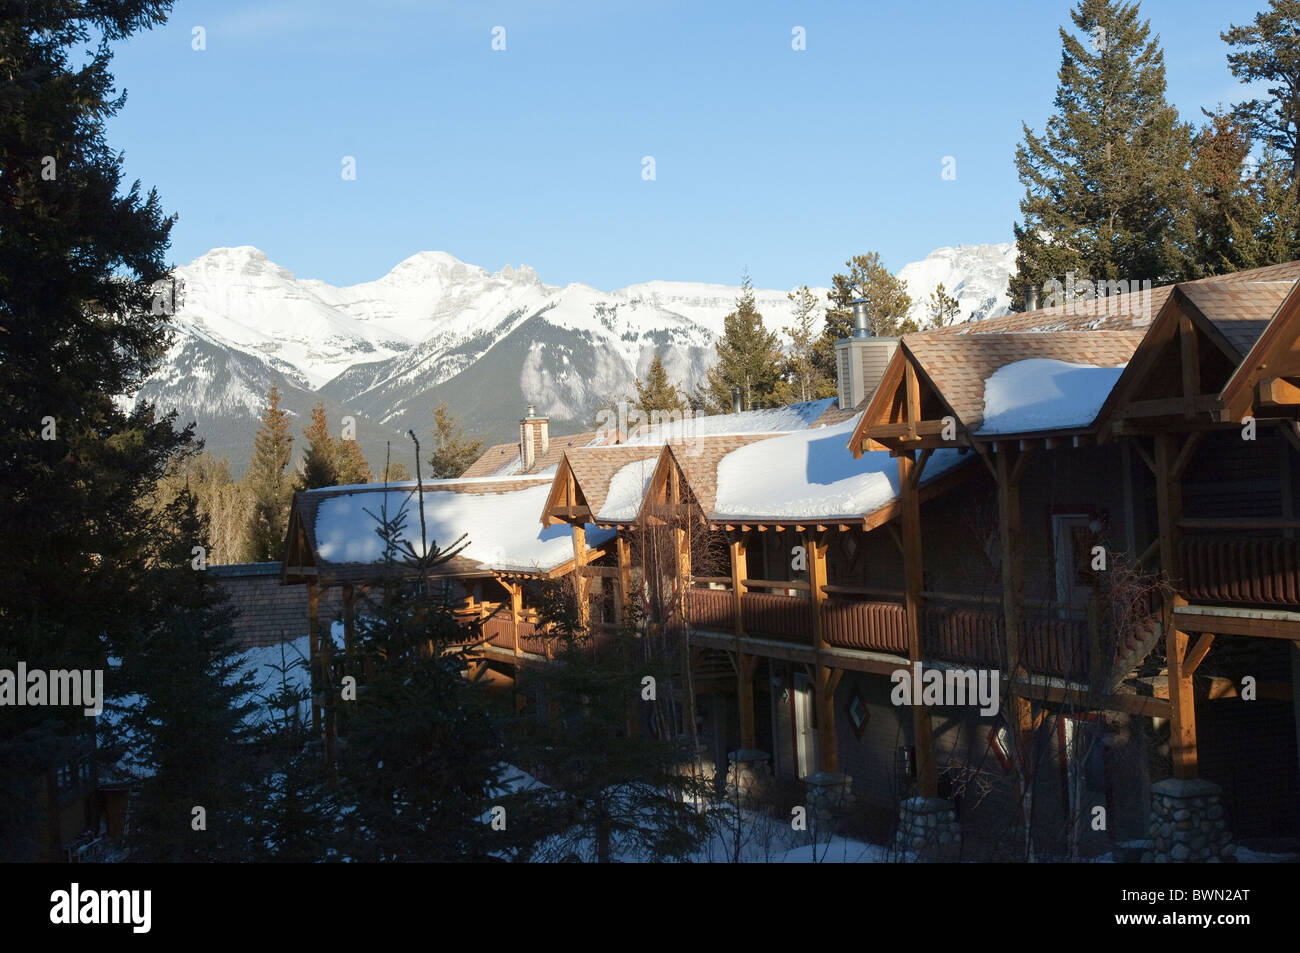 Banff Alberta Canada. Rocky Mountains and the Buffalo Mountain Lodge. Stock Photo